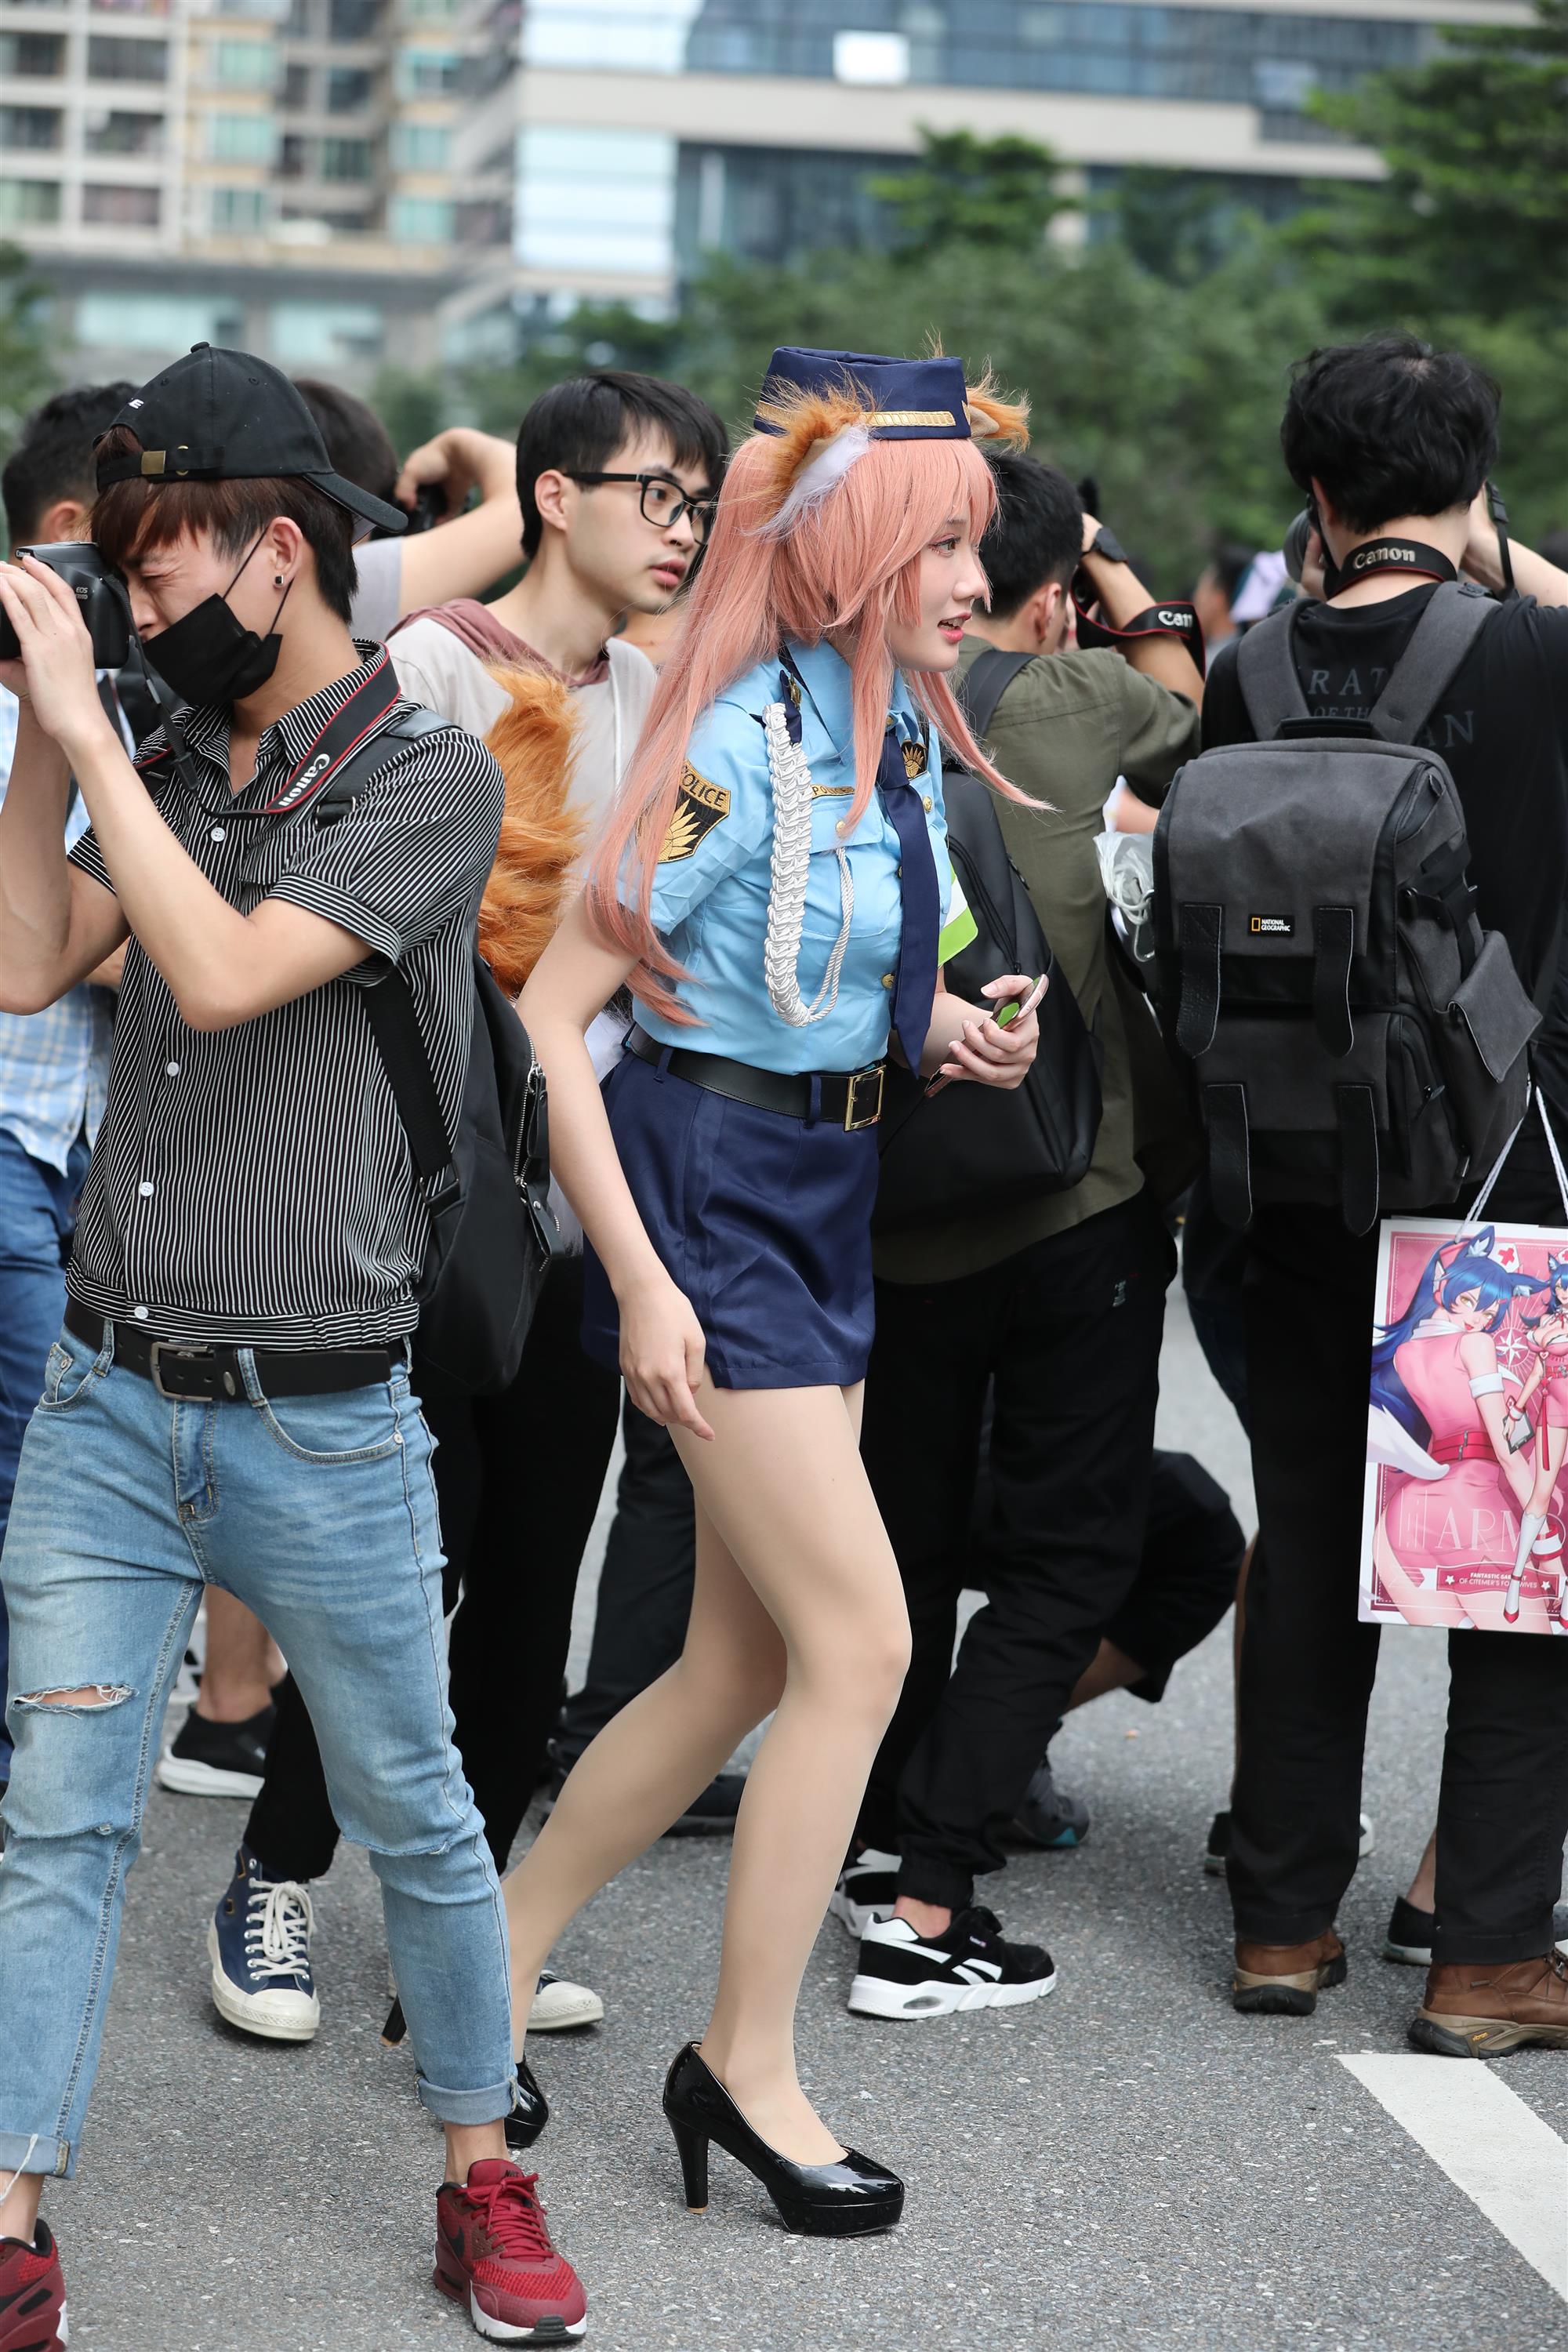 Street cosplay girl - 7.jpg